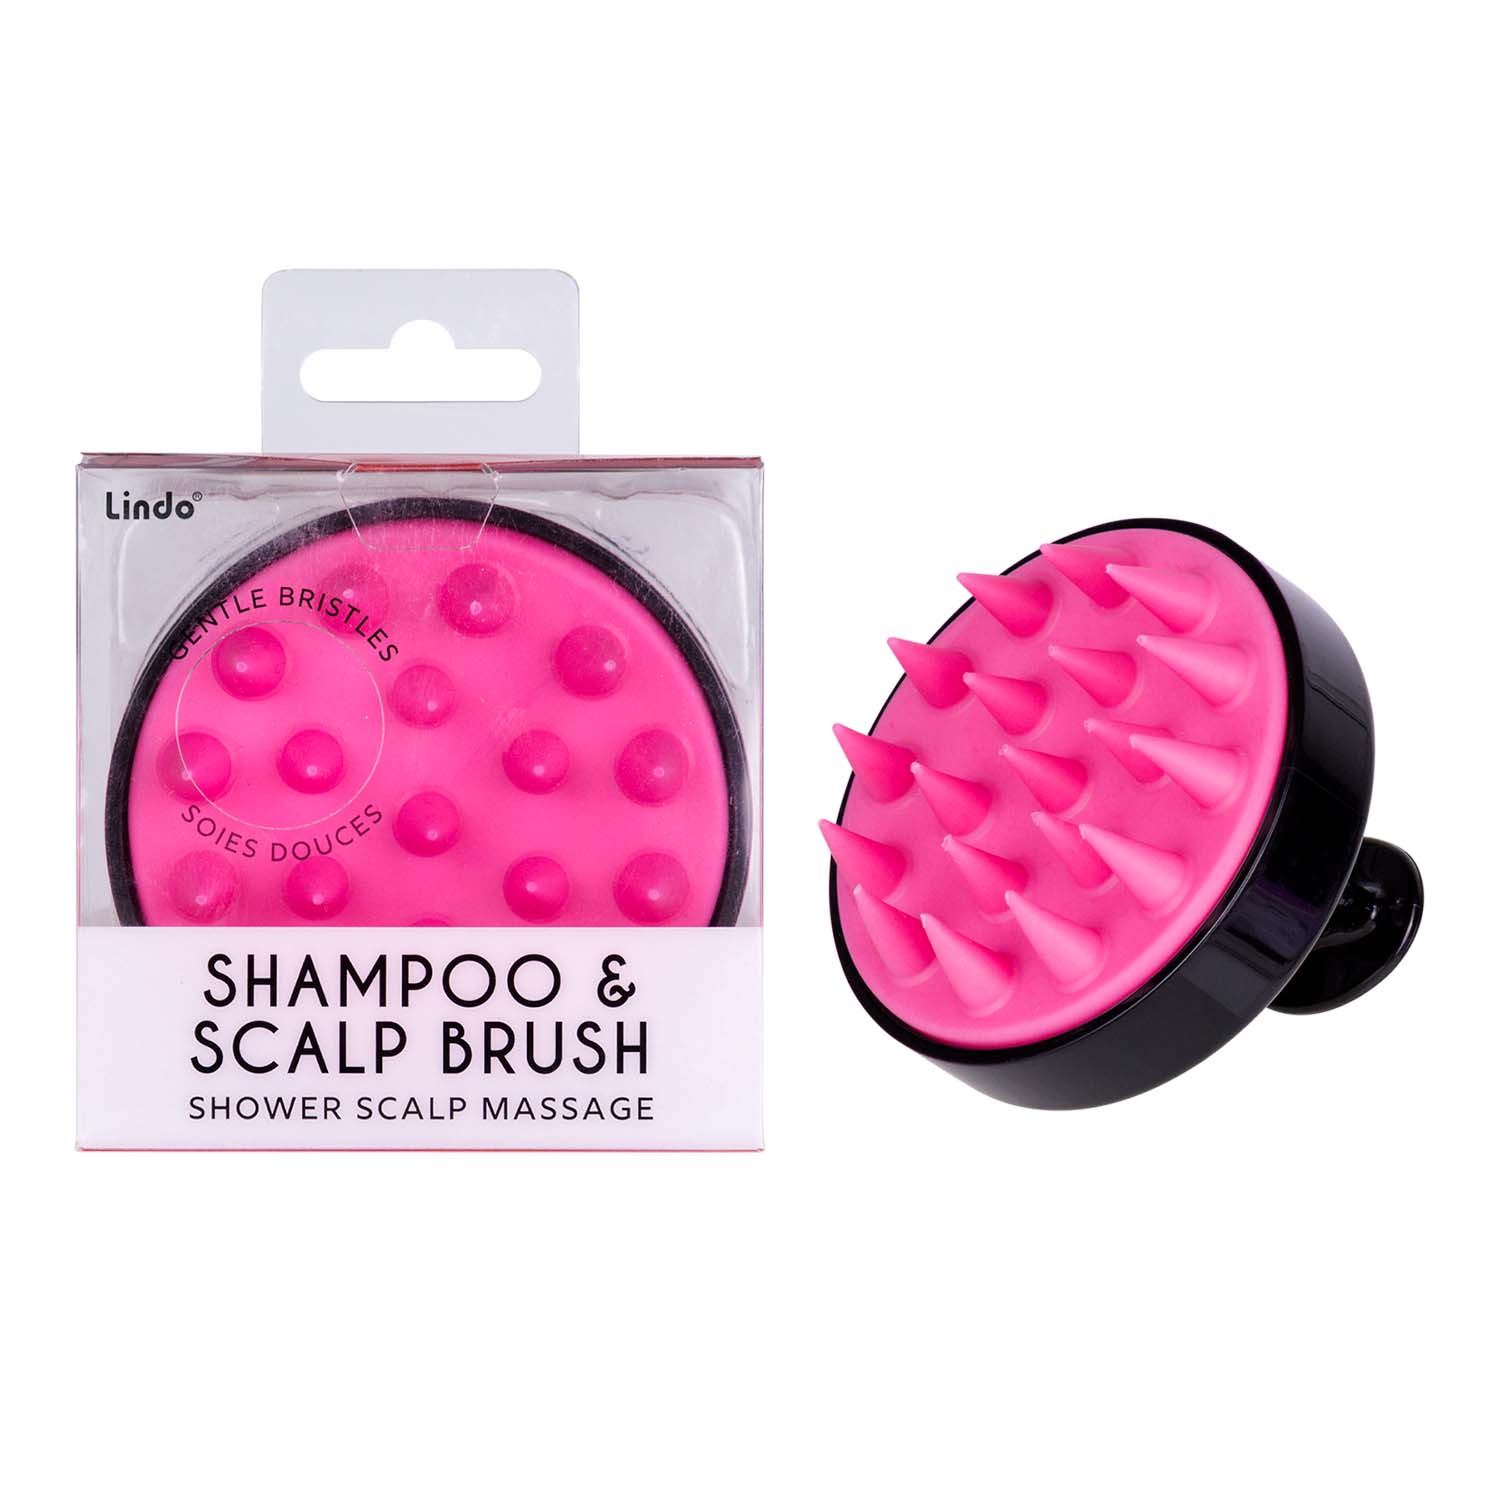 Lindo Shampoo & Scalp Brush - Shower Scalp Massage - Mortise And Tenon